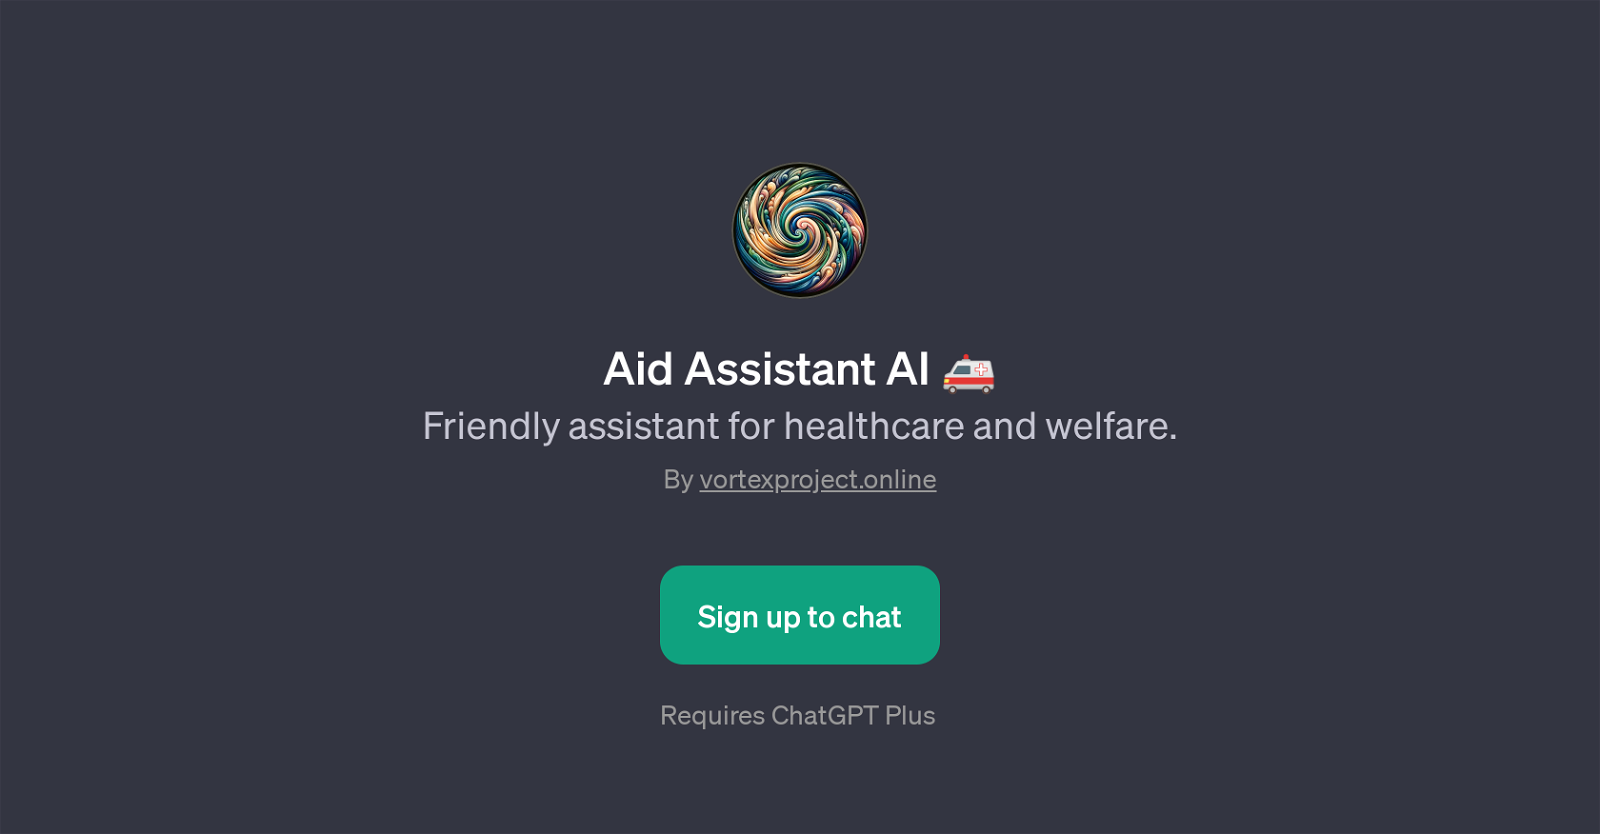 Aid Assistant AI website